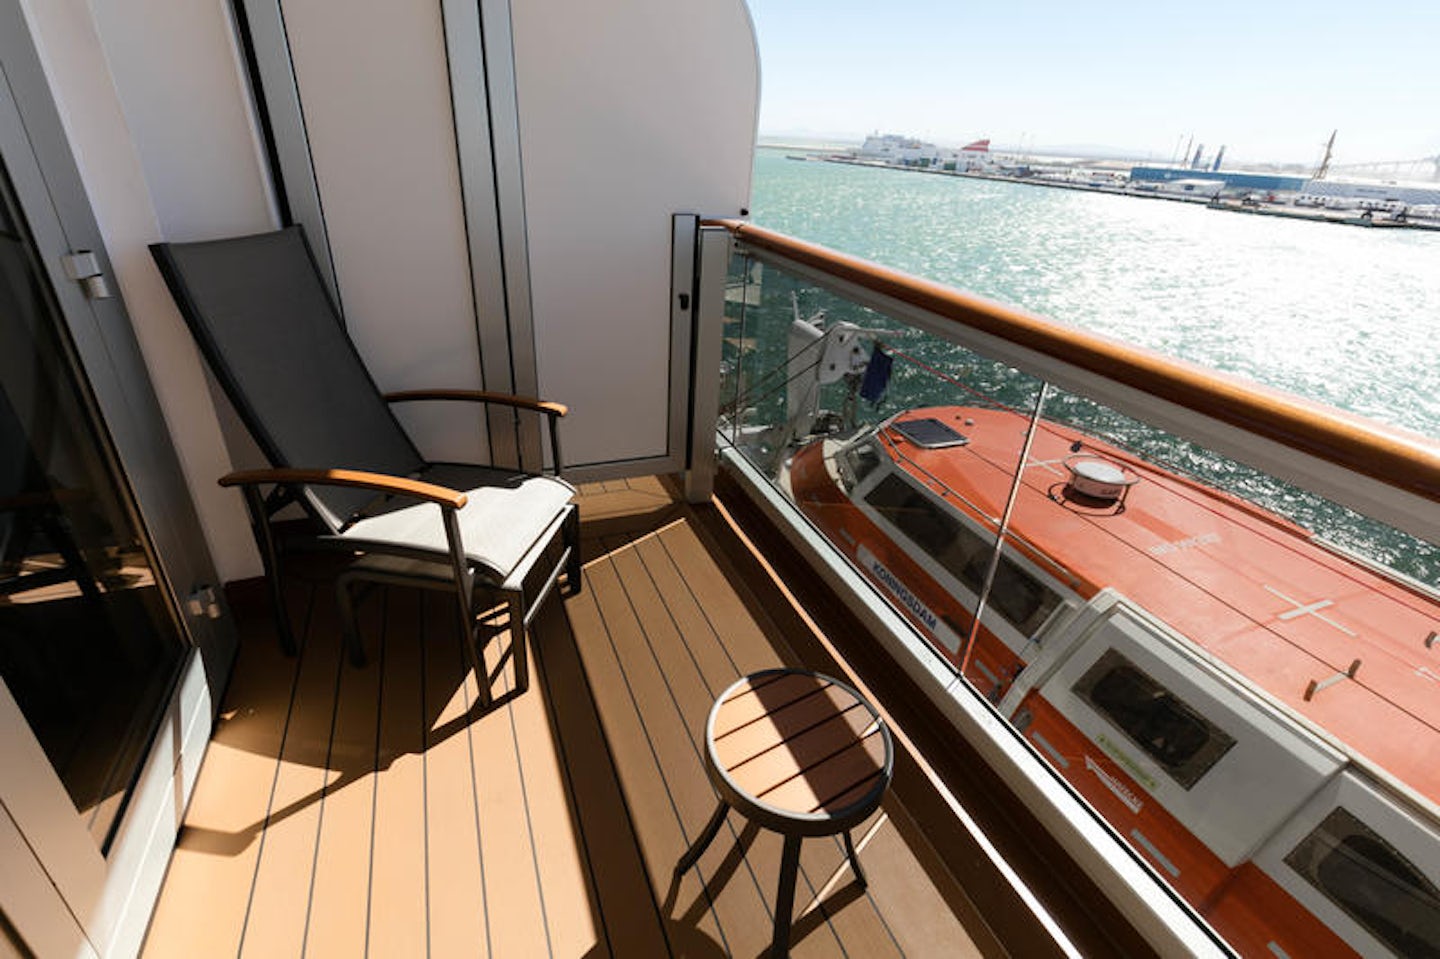 koningsdam cruise ship cabins